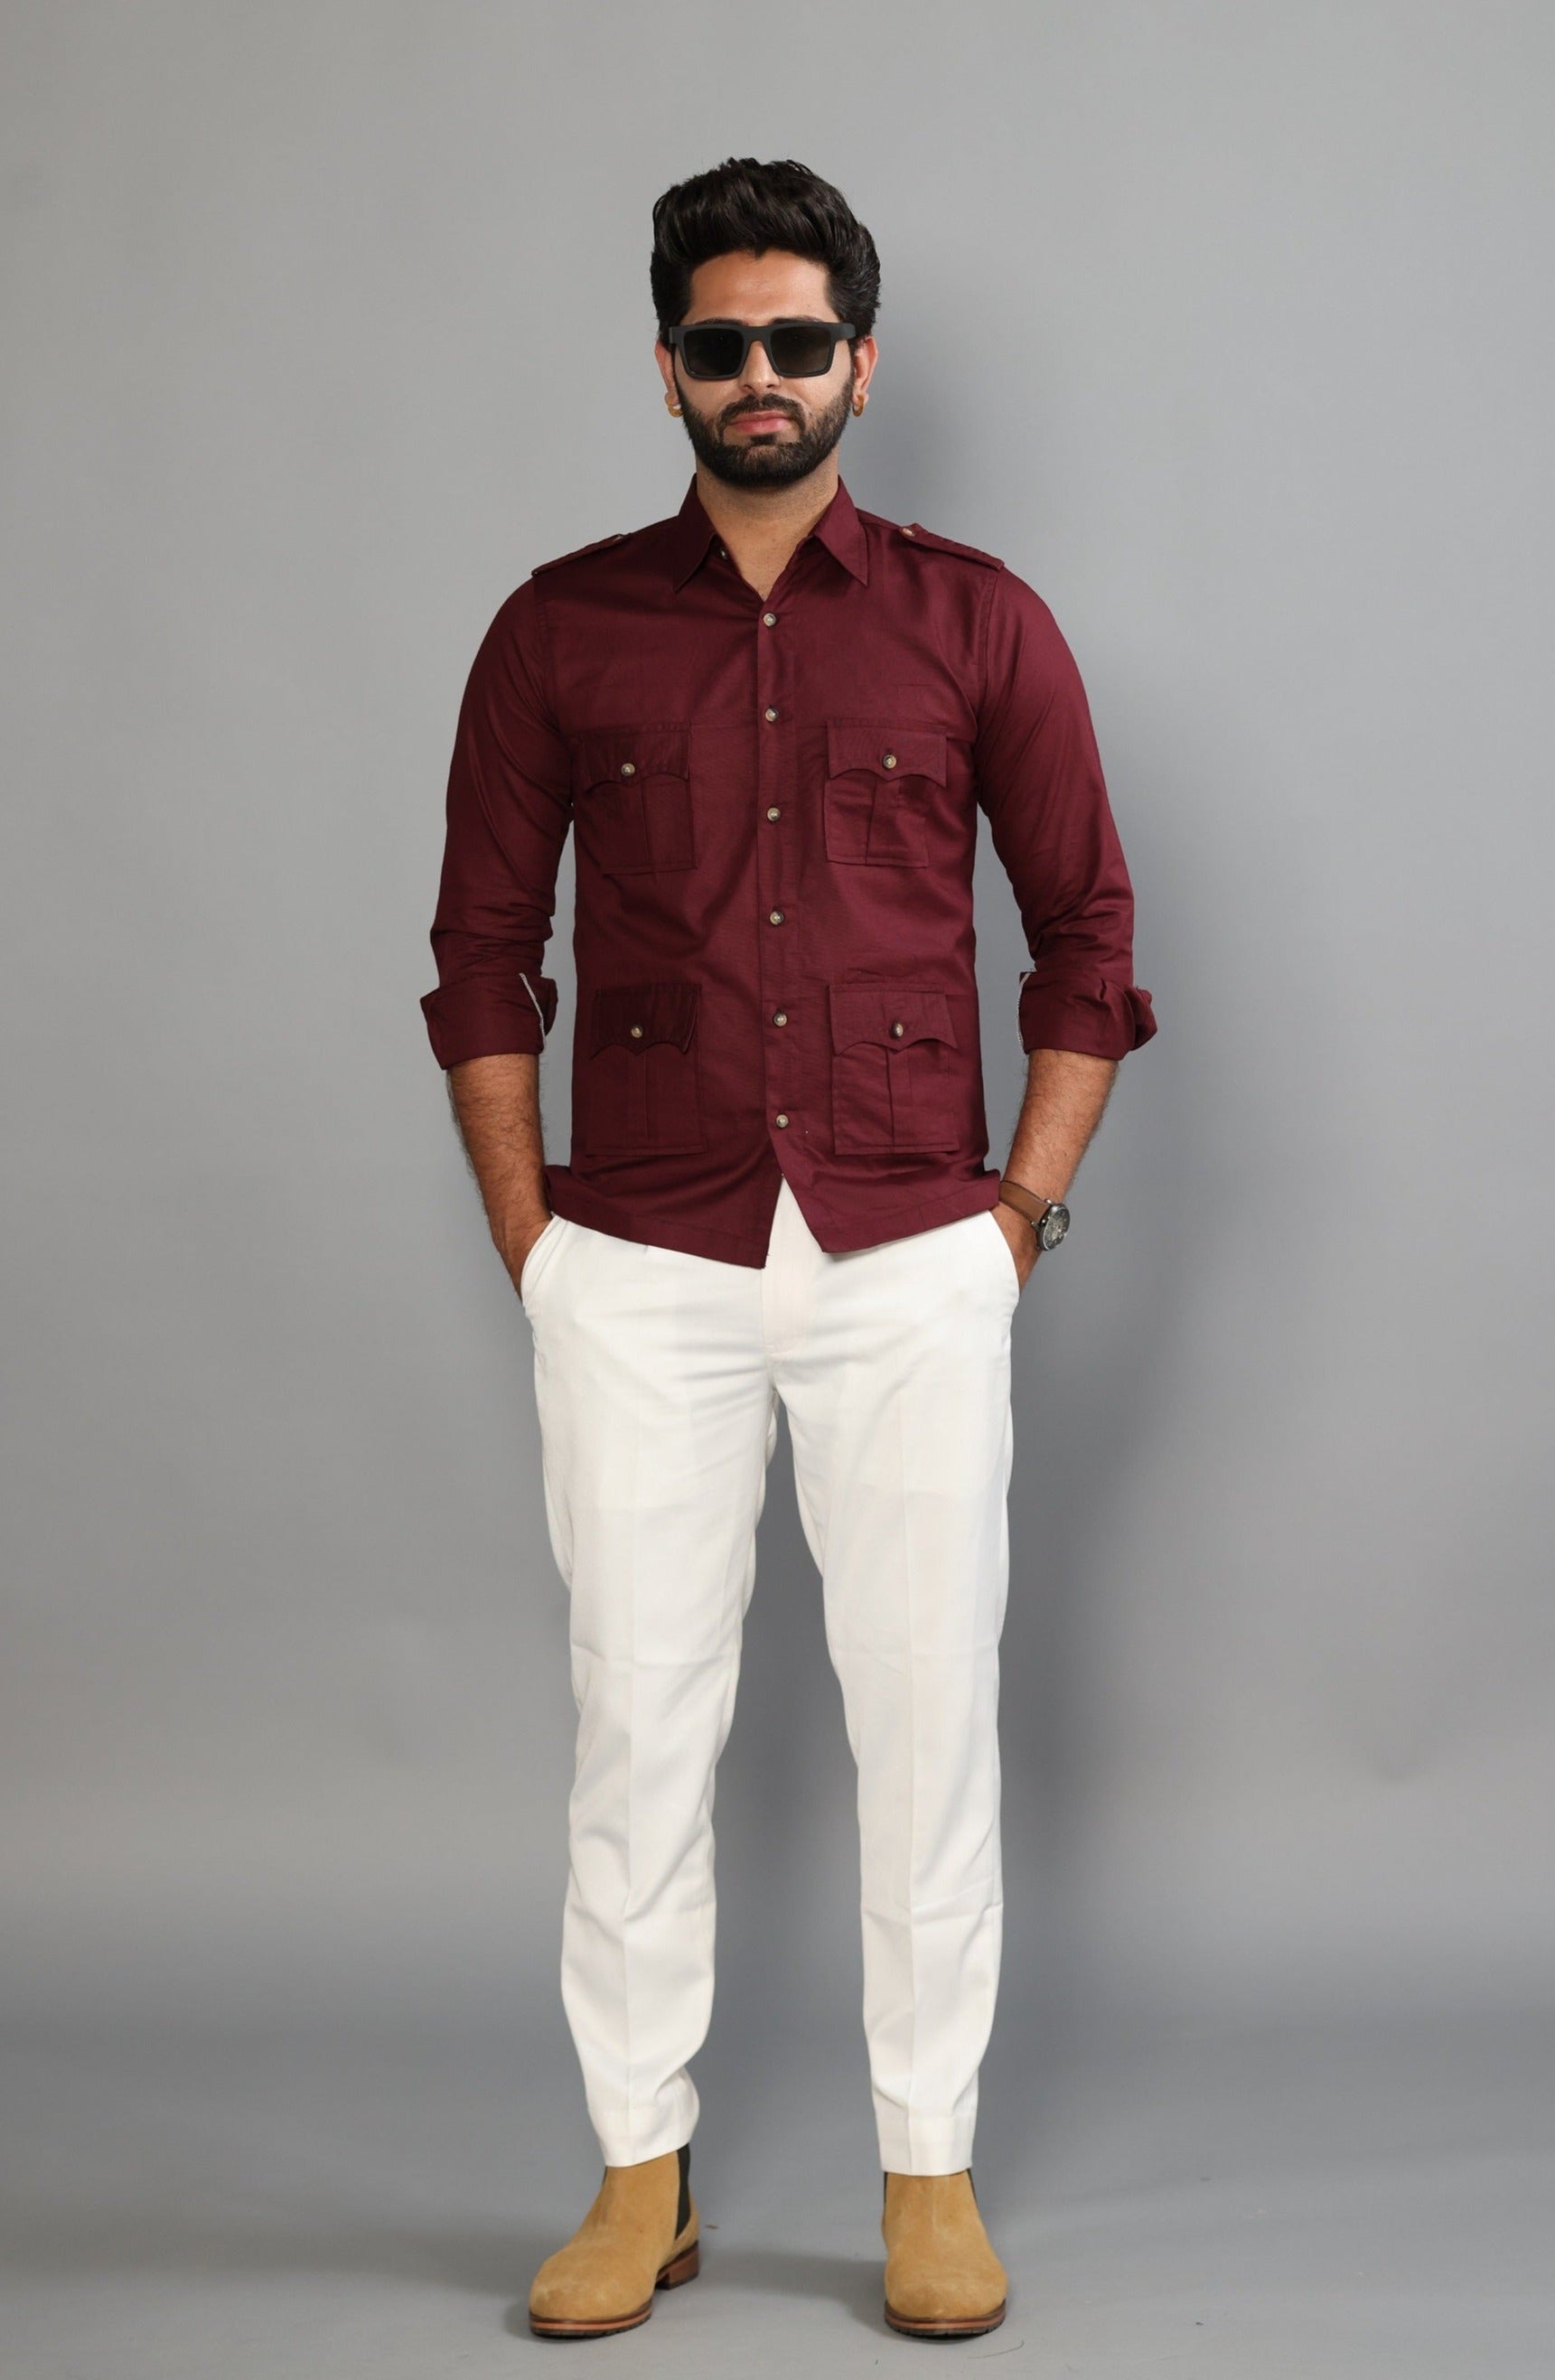 Maroon Shirt Beige Pants on Sale, SAVE 42% - productoscadiz.com